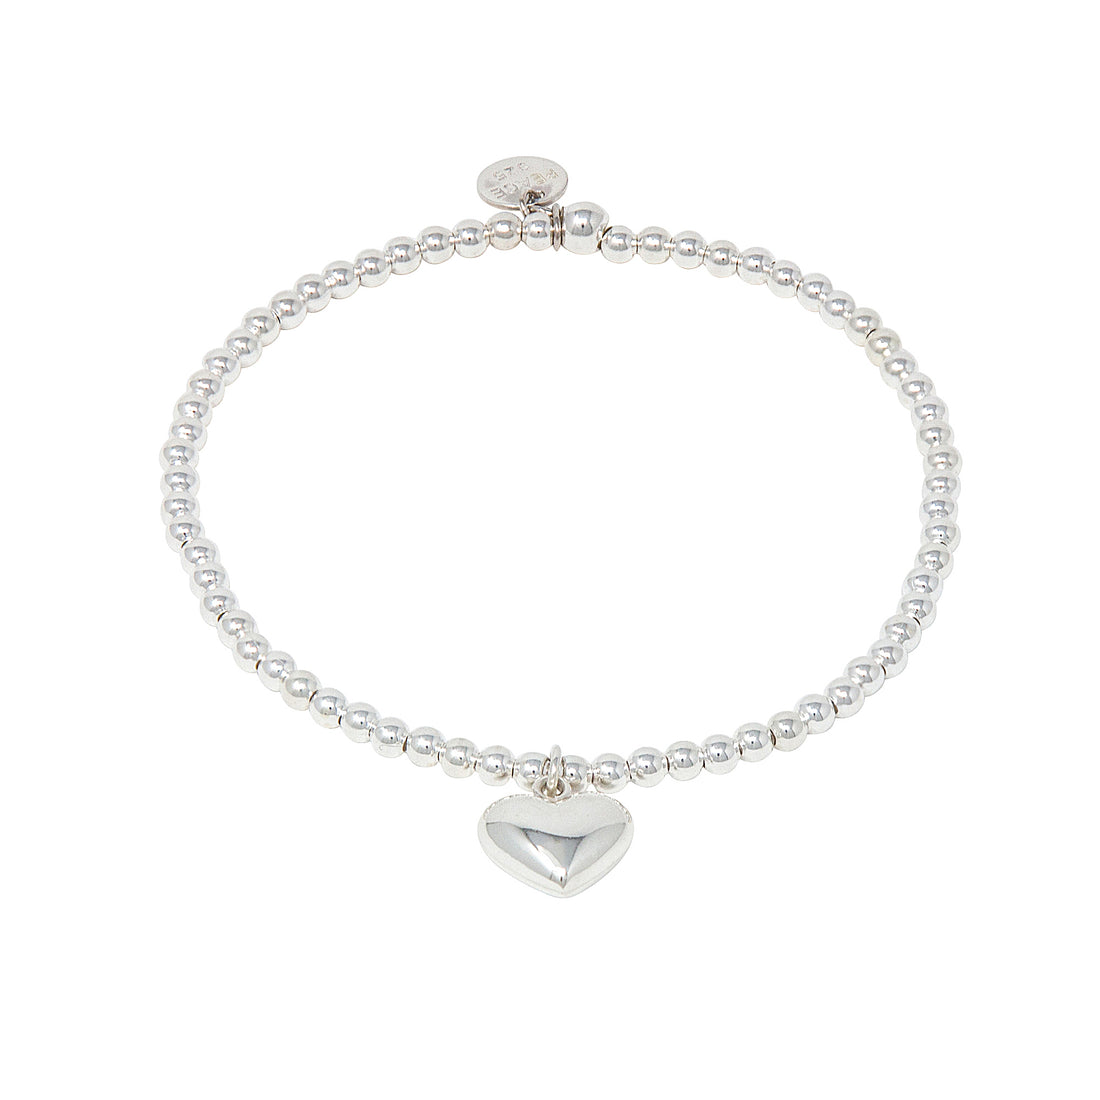 A high polish bead stretch bracelet with a puffed heart charm.